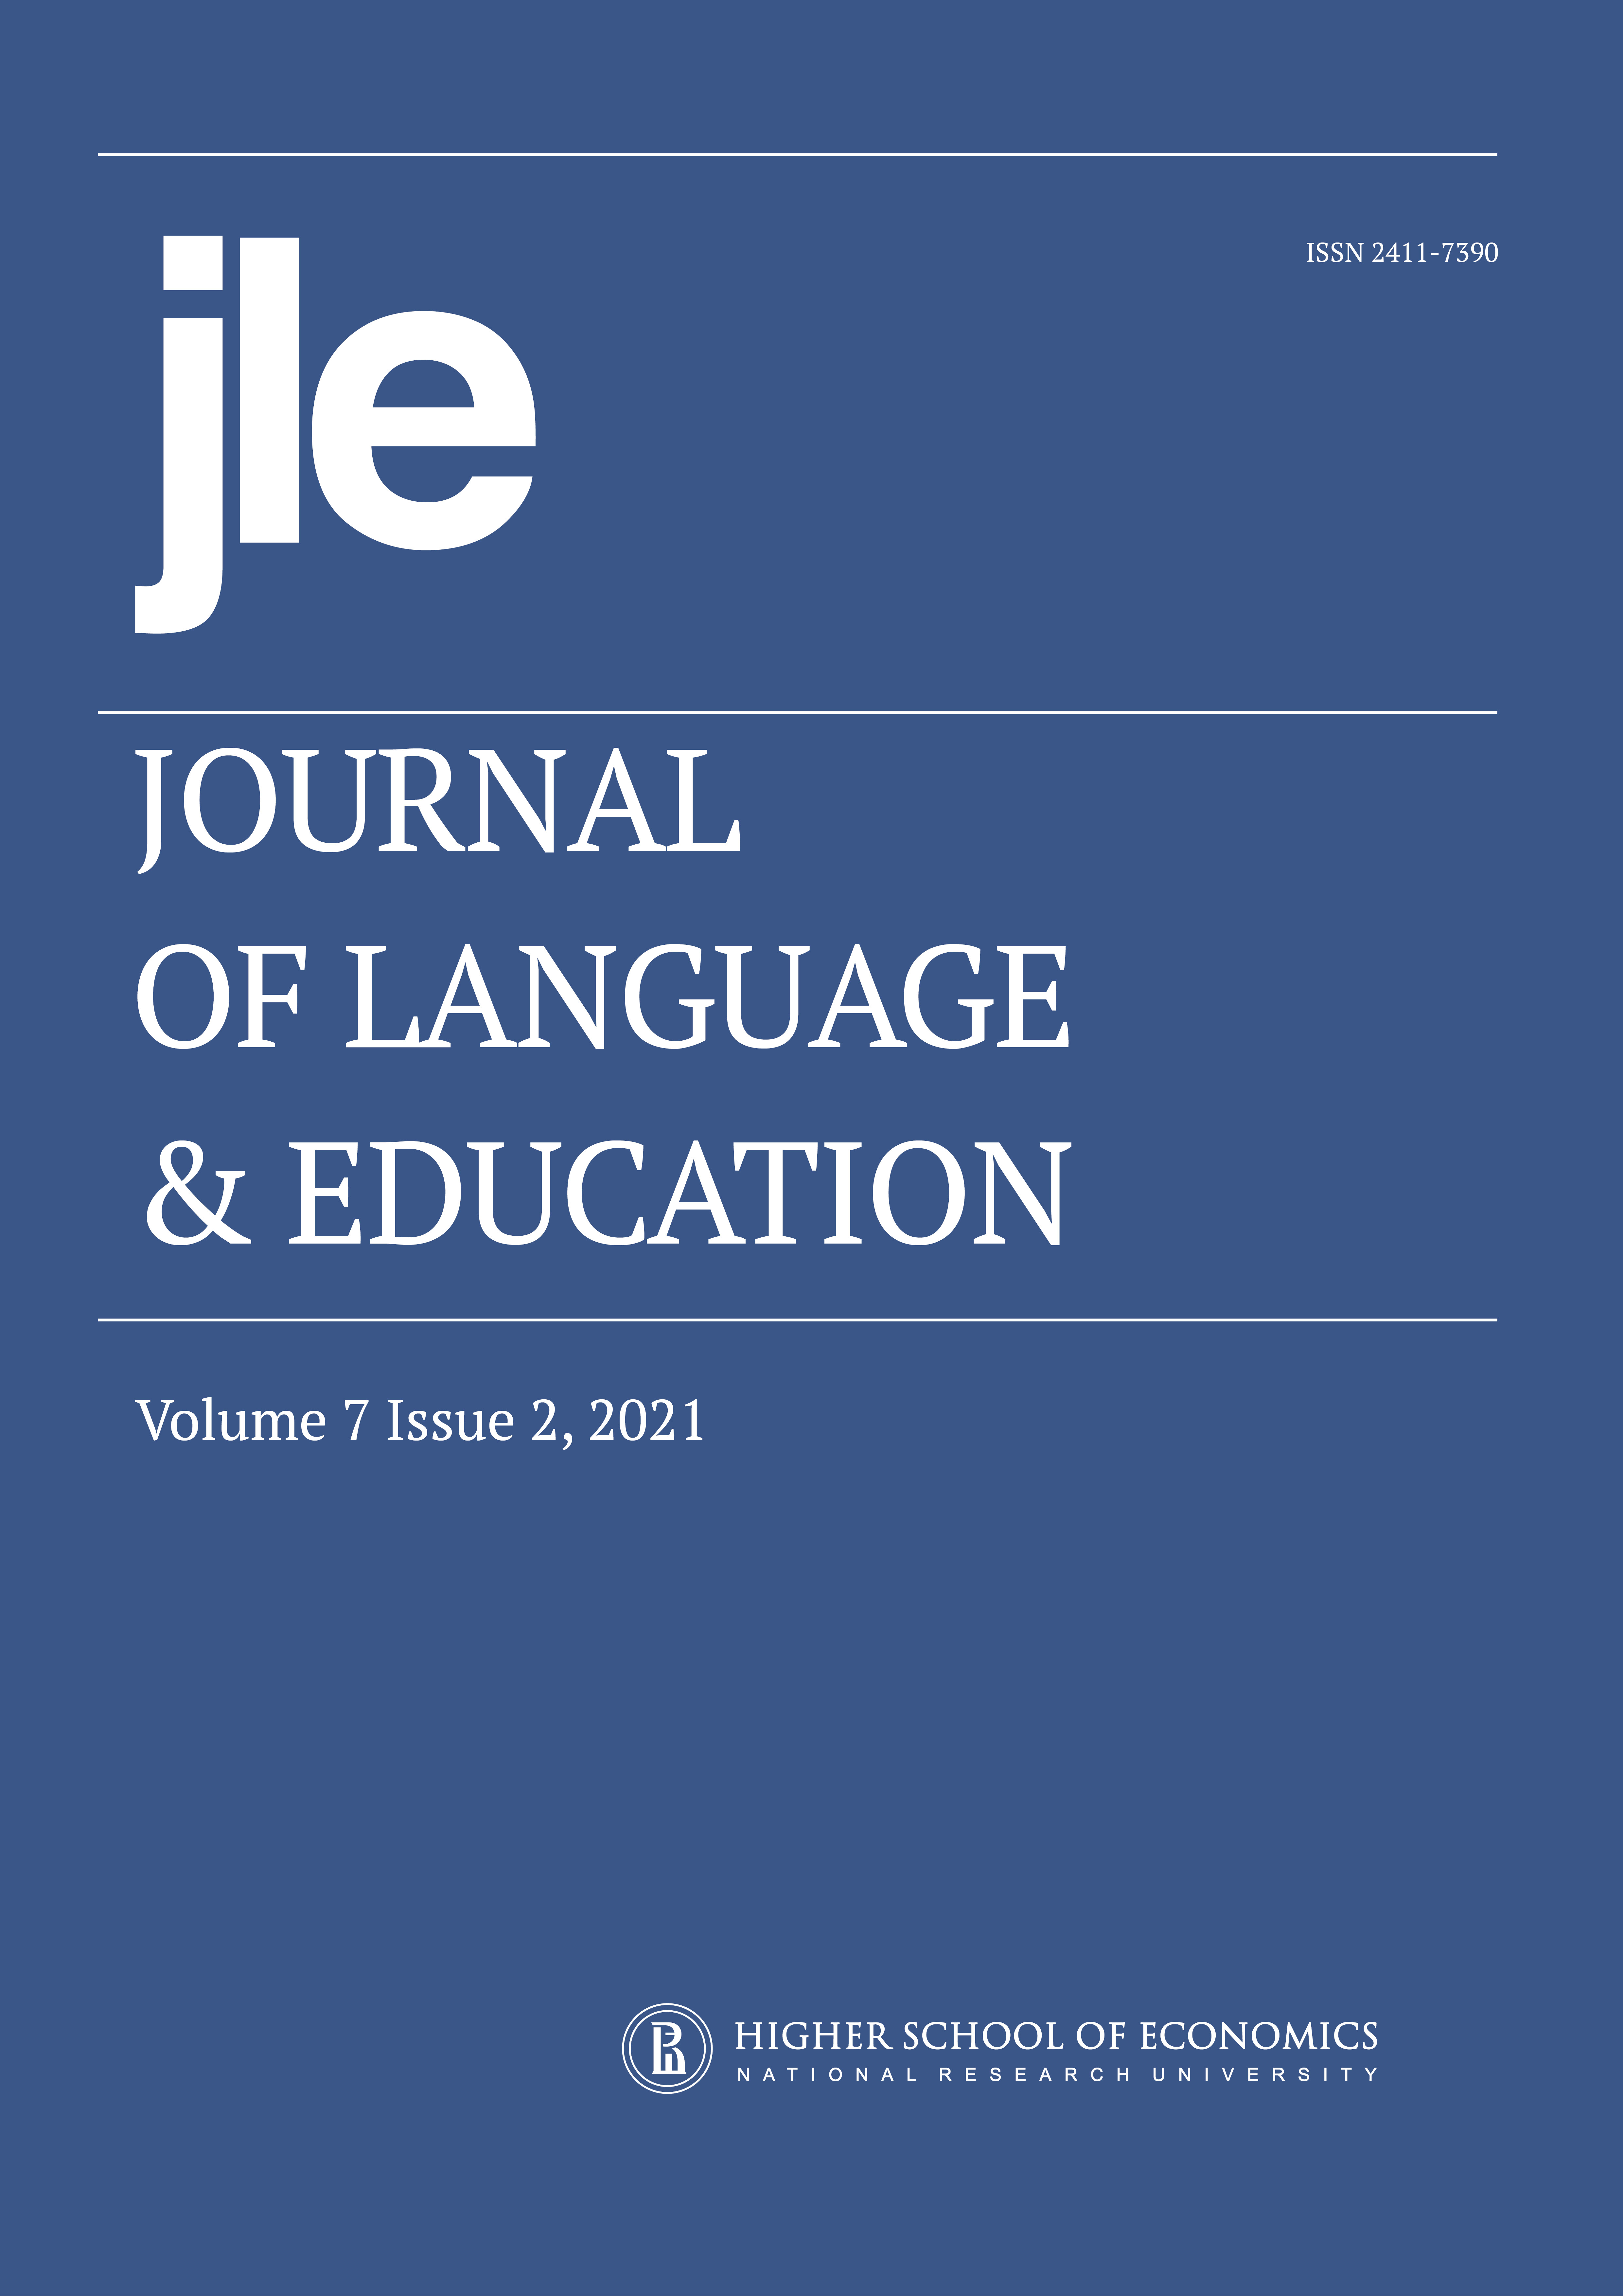 bilingual education journal articles